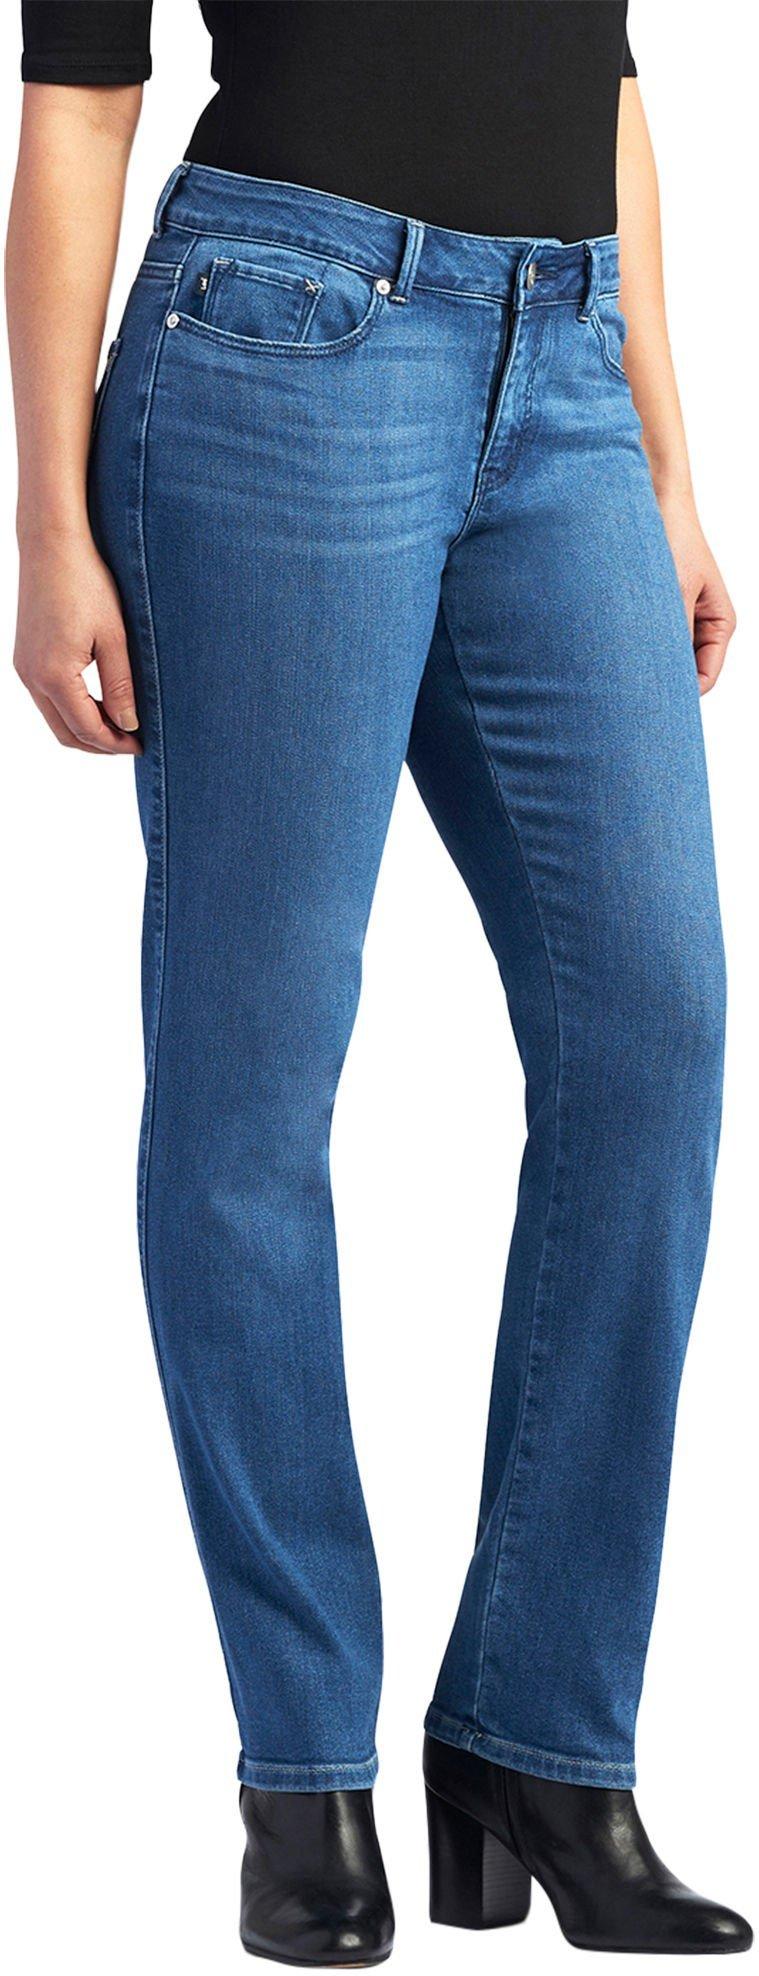 Gloria Vanderbilt Petite Amanda Stretch Jeans | Bealls Florida